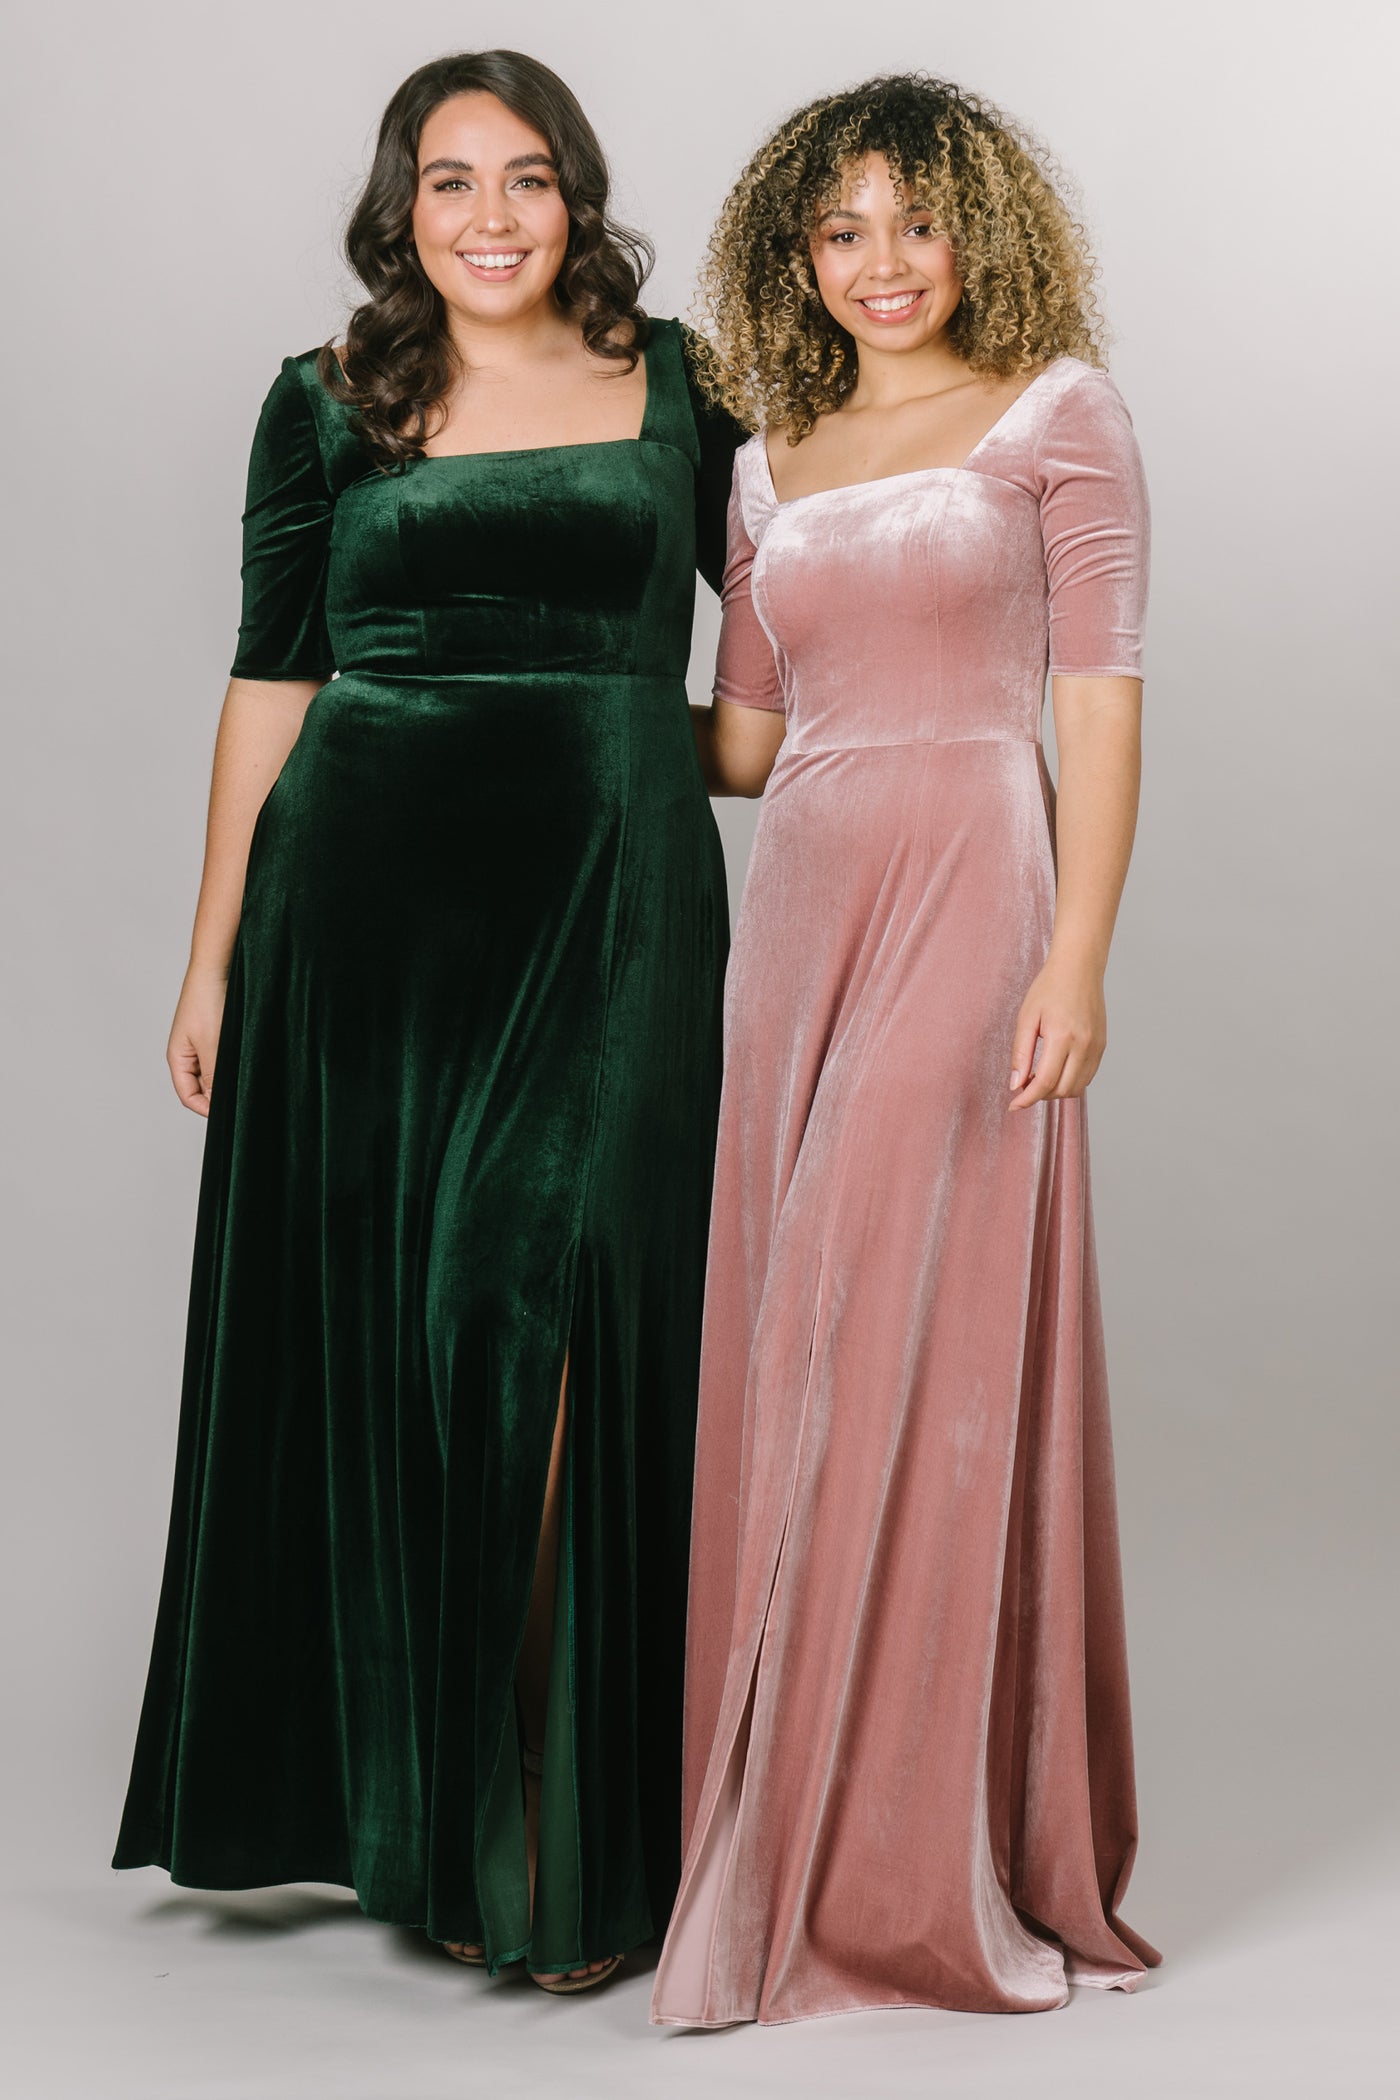 Modest Dresses - Modest Prom Dress - Formalwear Modest Dresses - Bridesmaid Modest Dresses.  Green and pink dresses side by side.